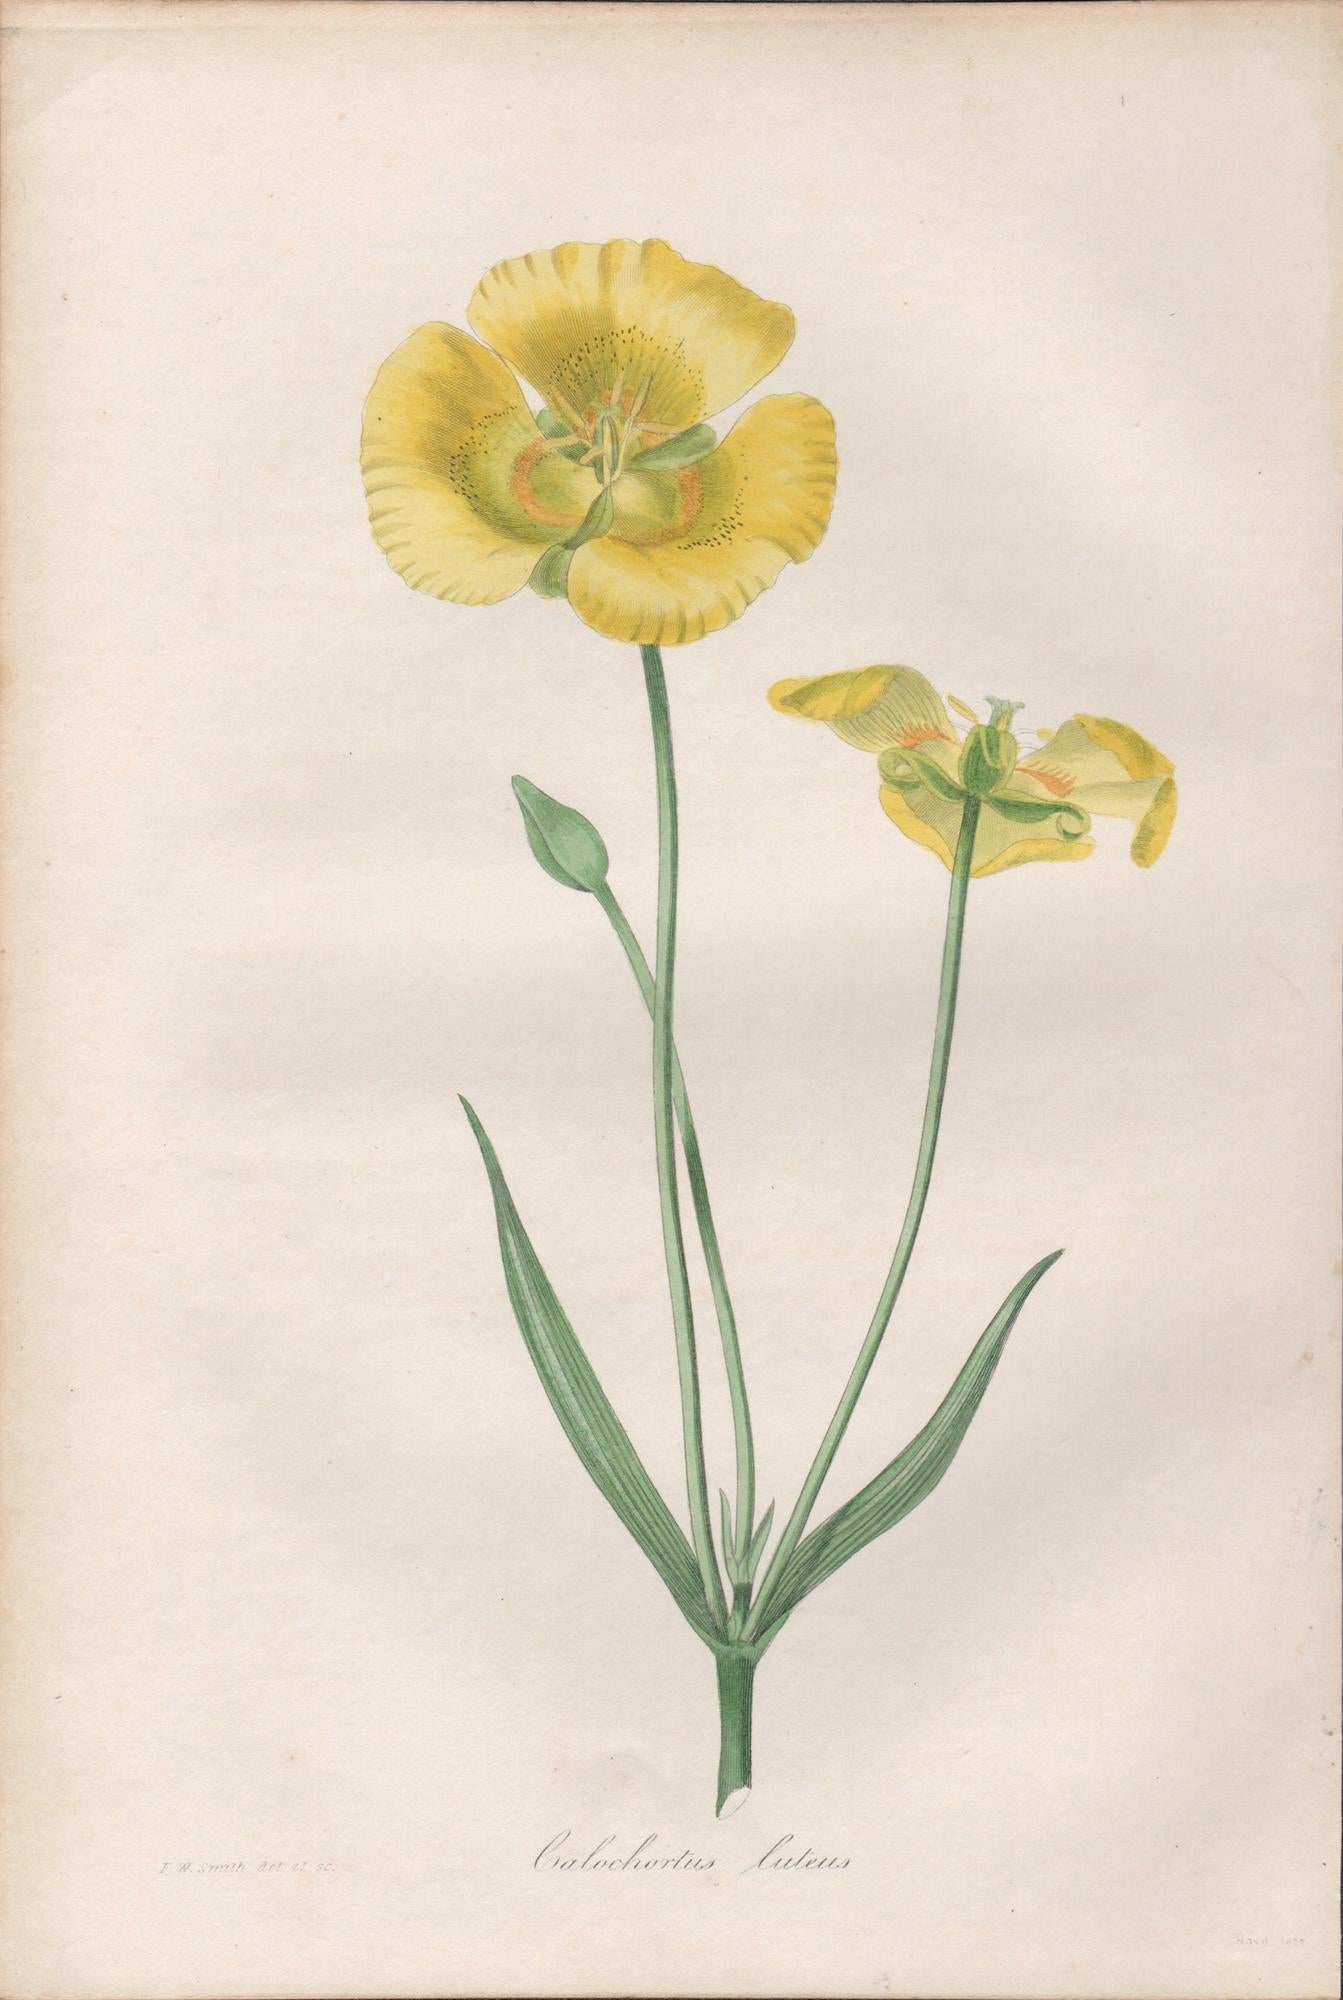 Frederick William Smith Print - Calcochortus luteus, antique botanical yellow flower engraving